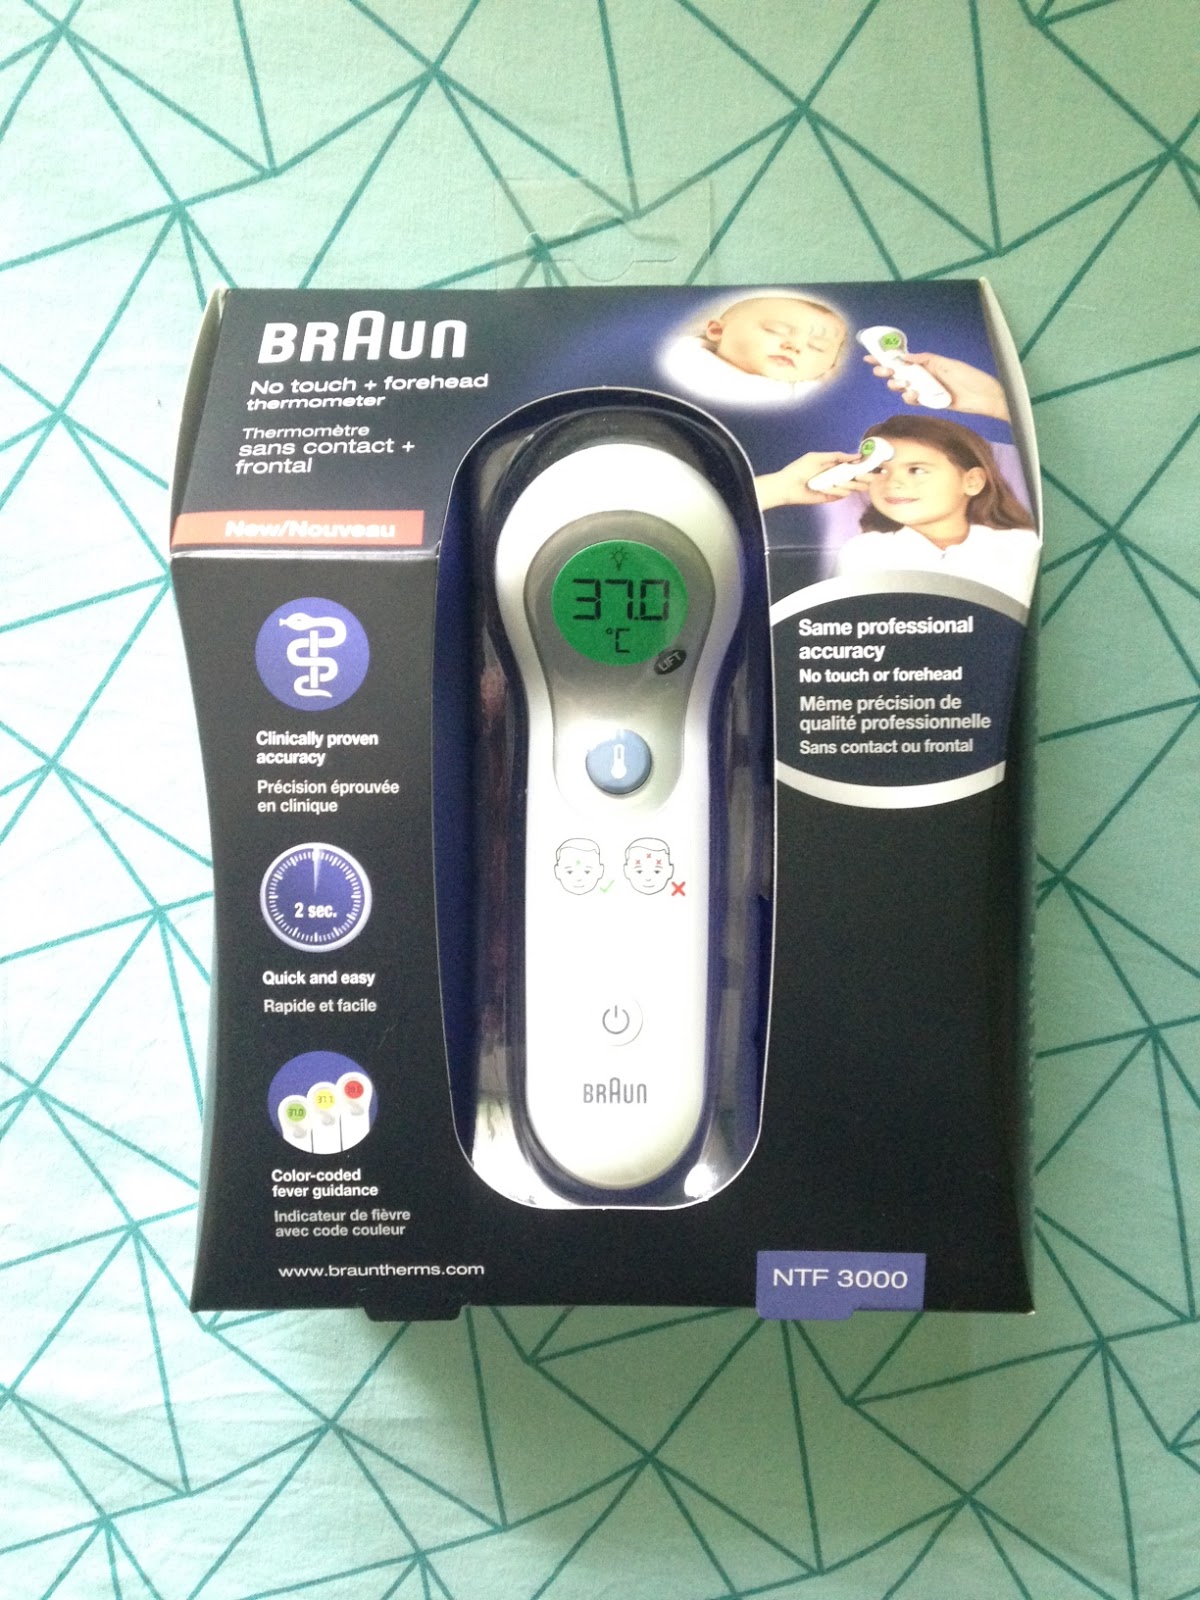 Braun Thermomètre Sans Contact + Frontal, NTF3000